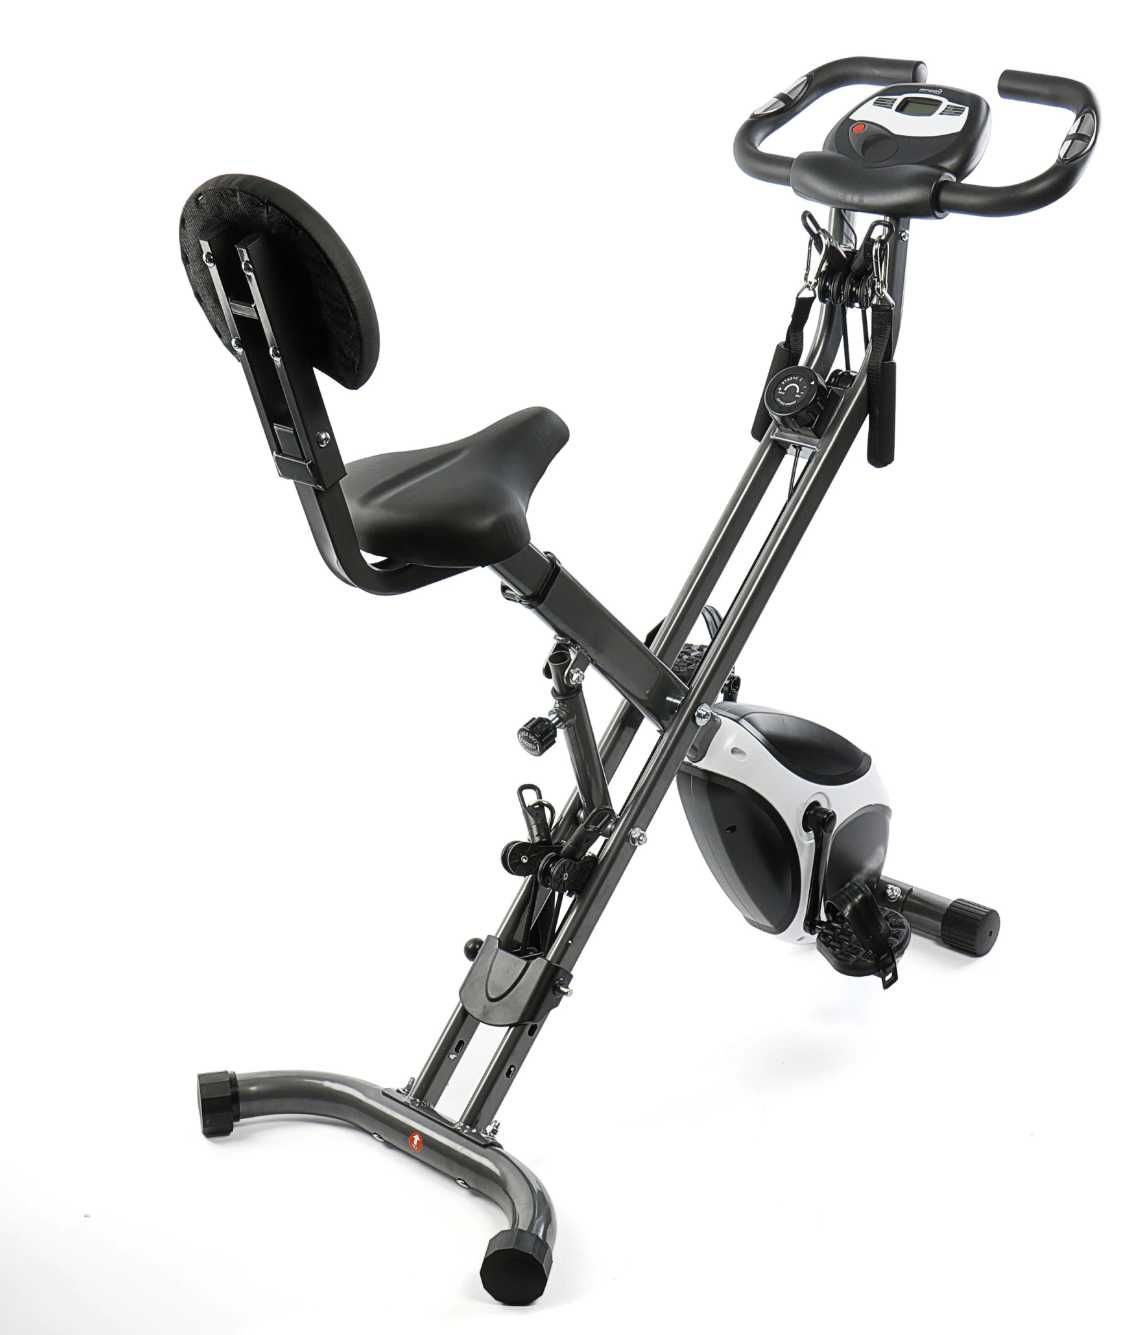 Bicicleta fitness pliabila KONDITION X BC-2100, cu corzi